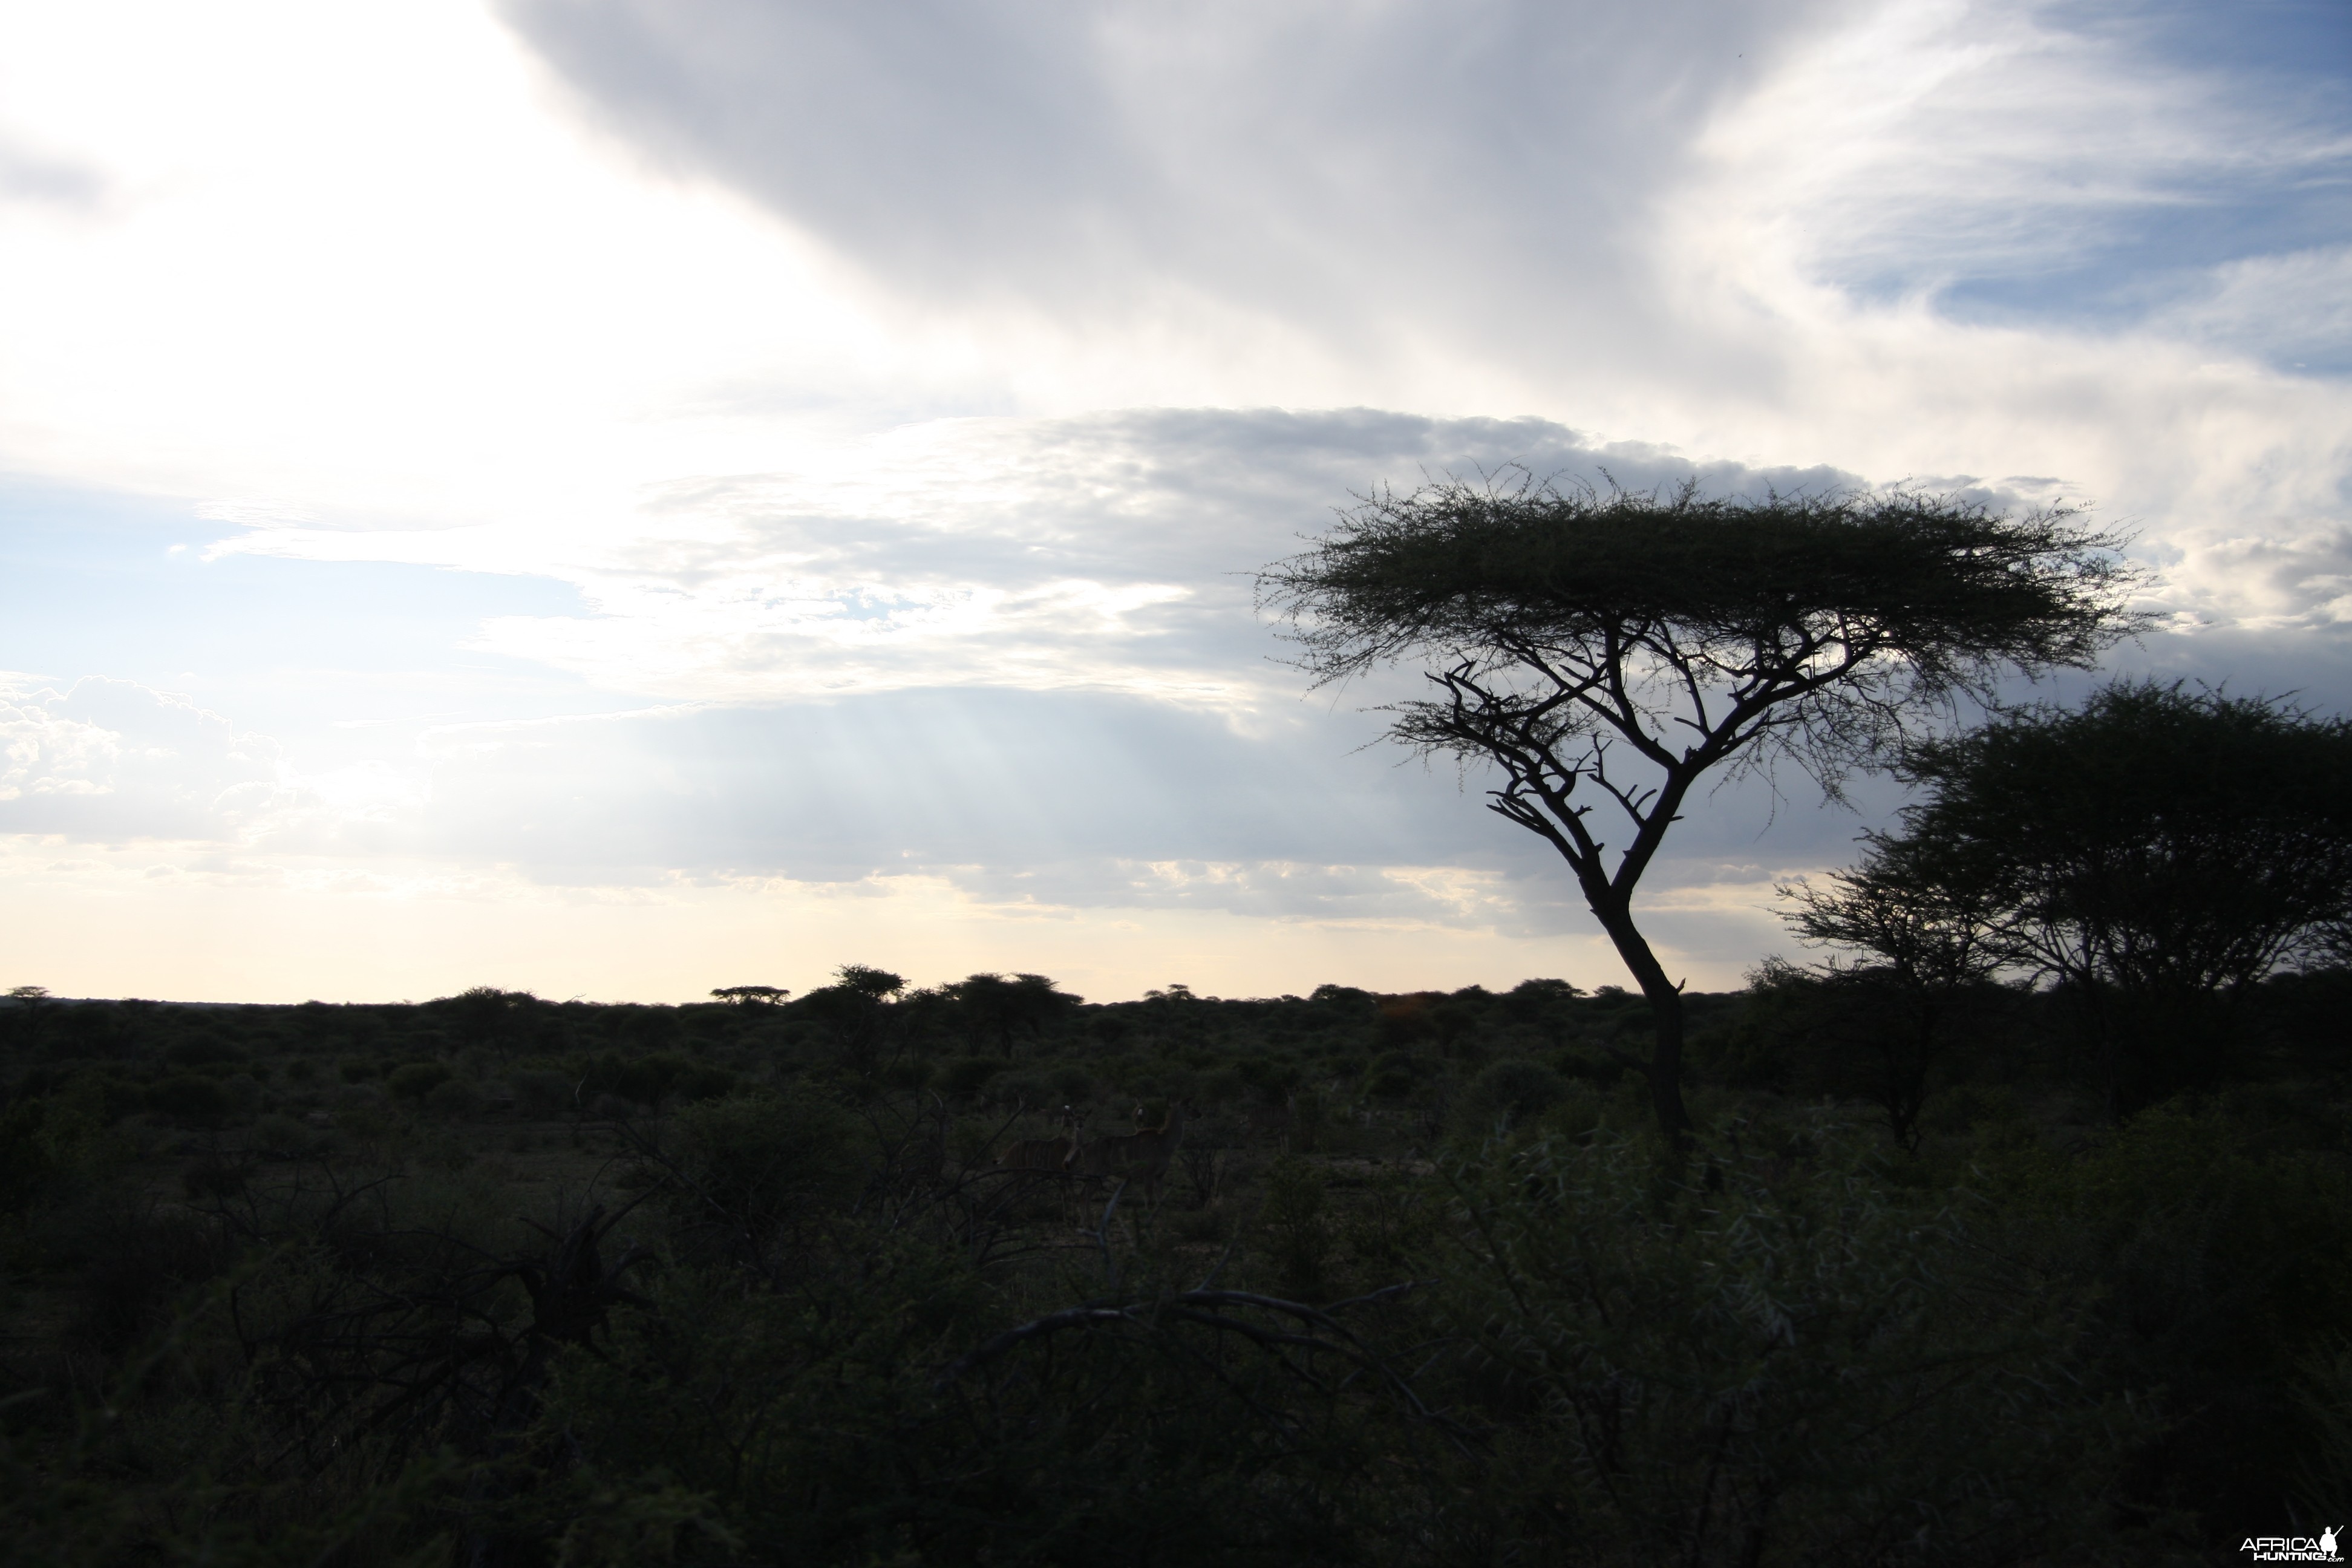 Namibian sky